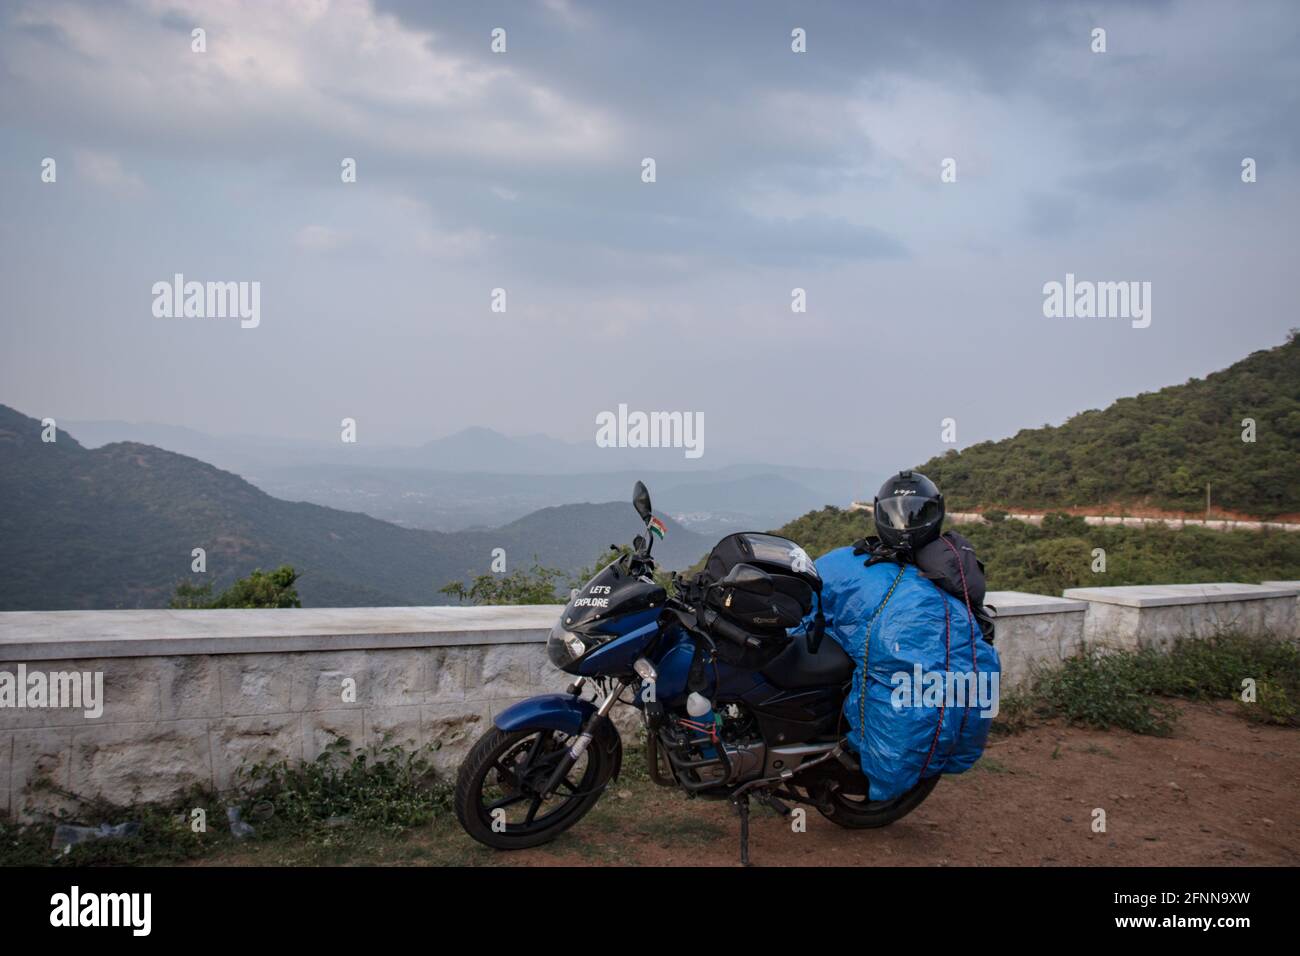 loaded motorcycle at mountain at morning Stock Photo